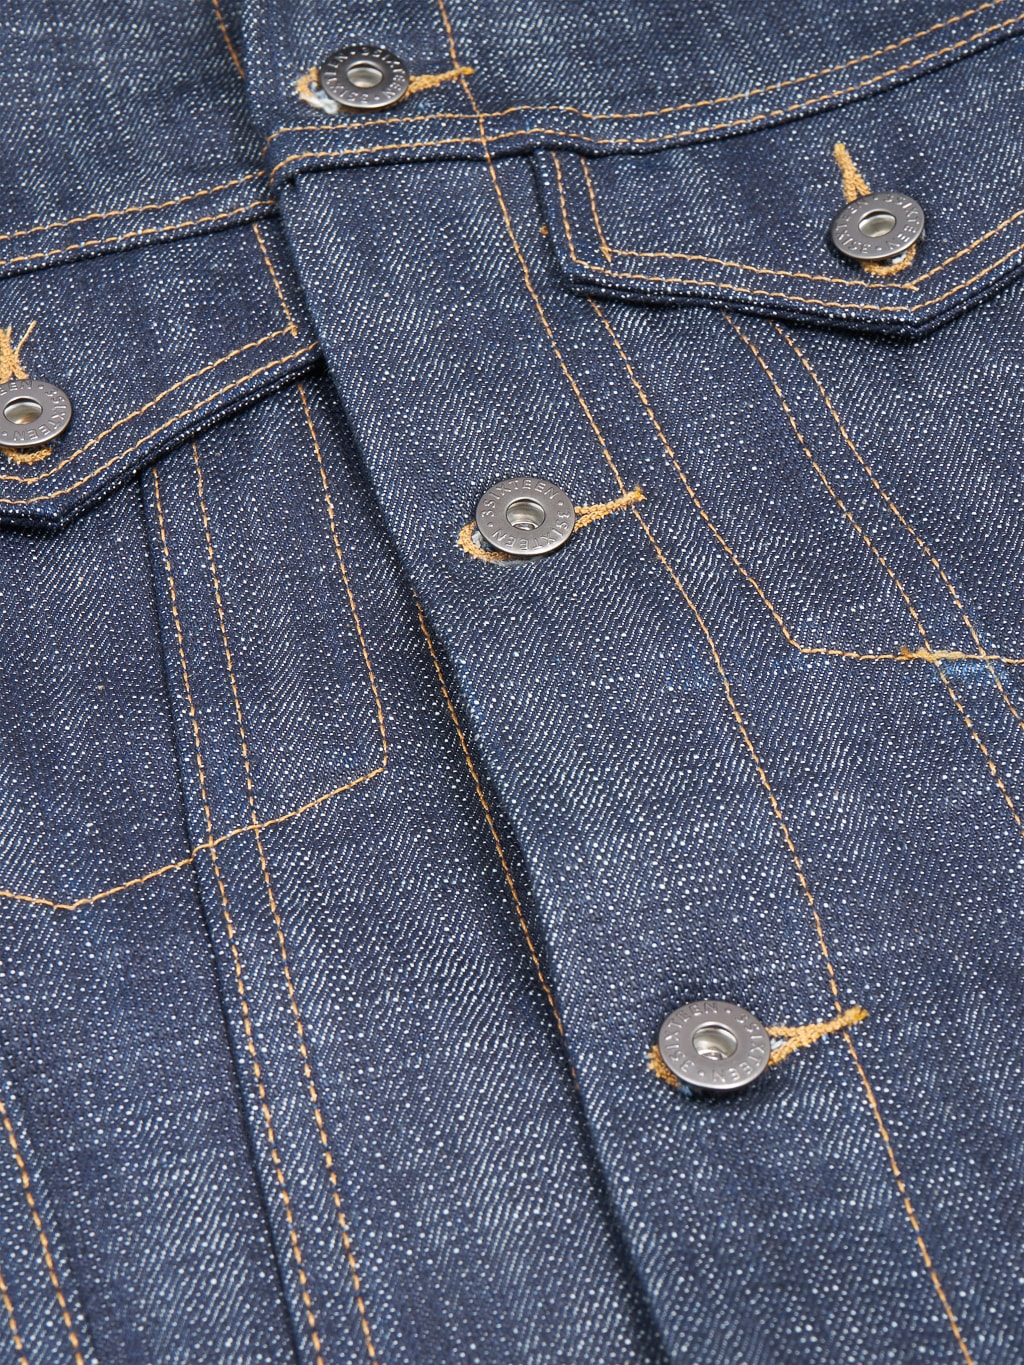 3sixteen 20th Anniversary Natural Indigo Type 3s Denim Jacket  buttons closeup